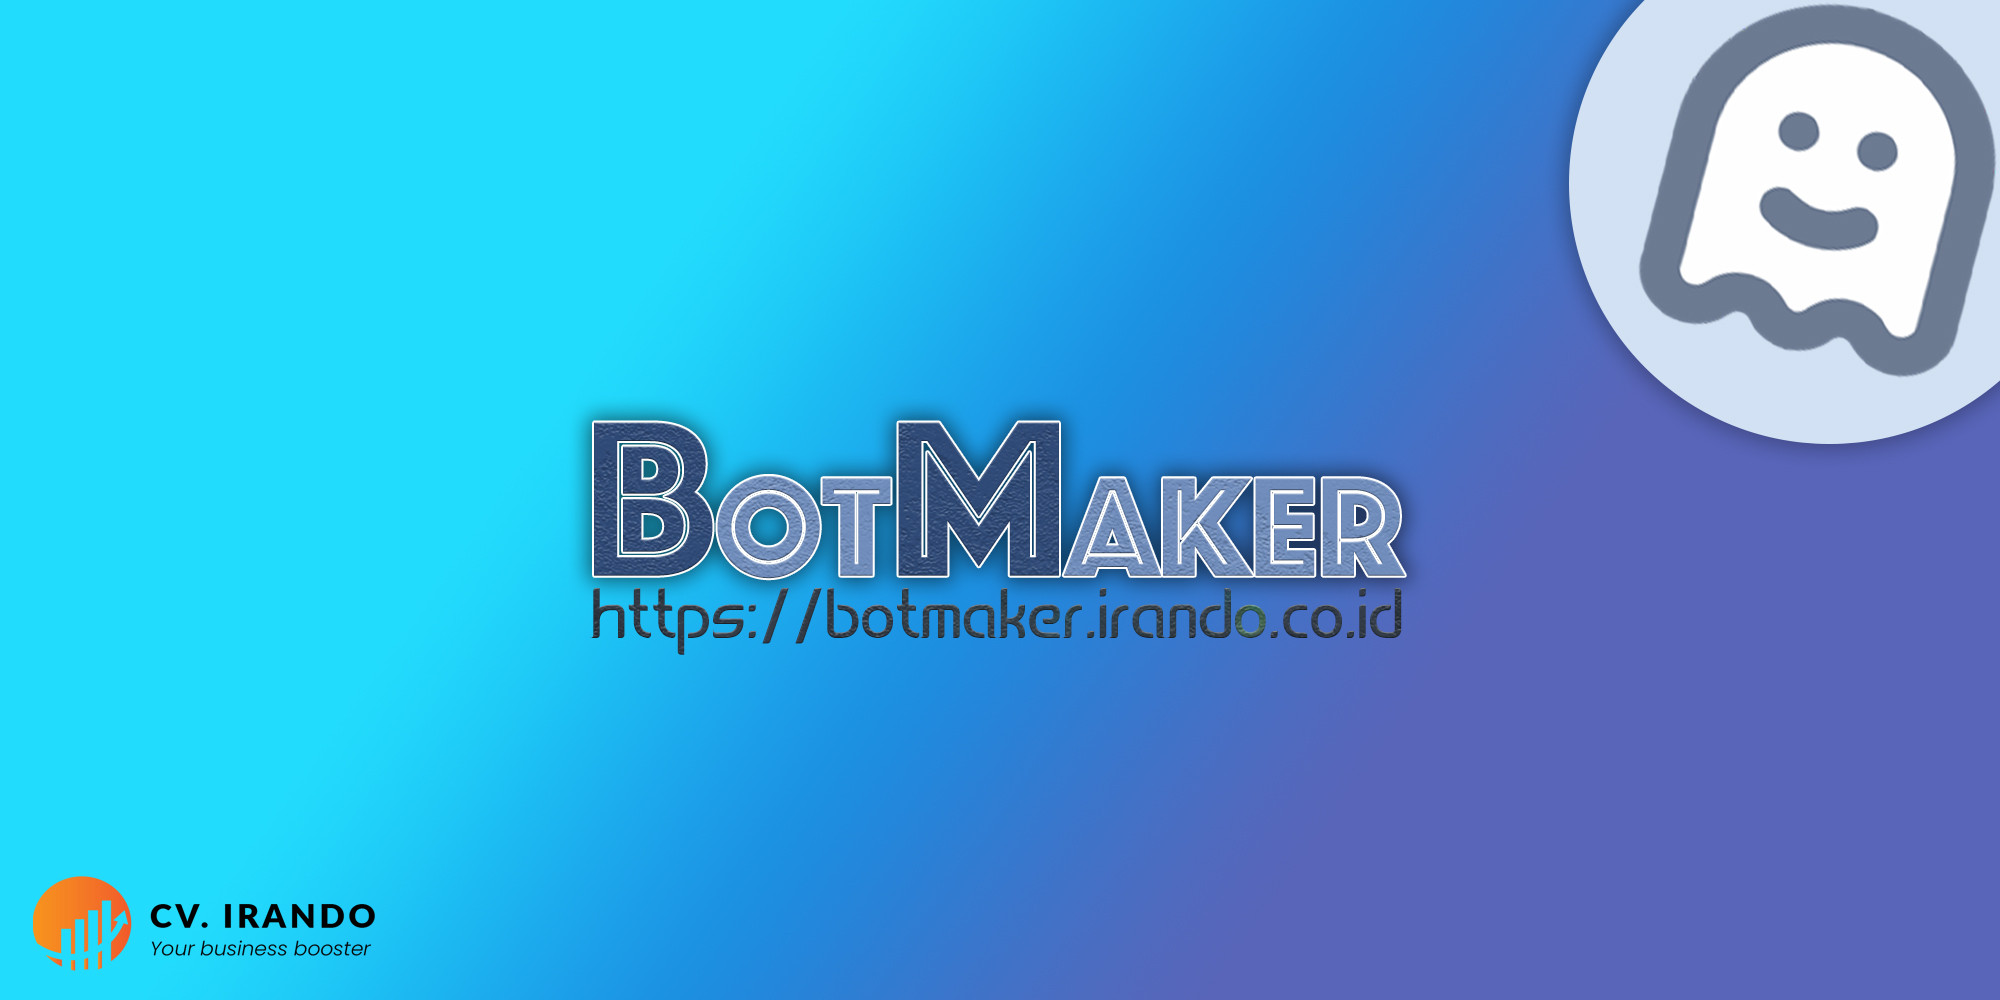 BotMaker is here